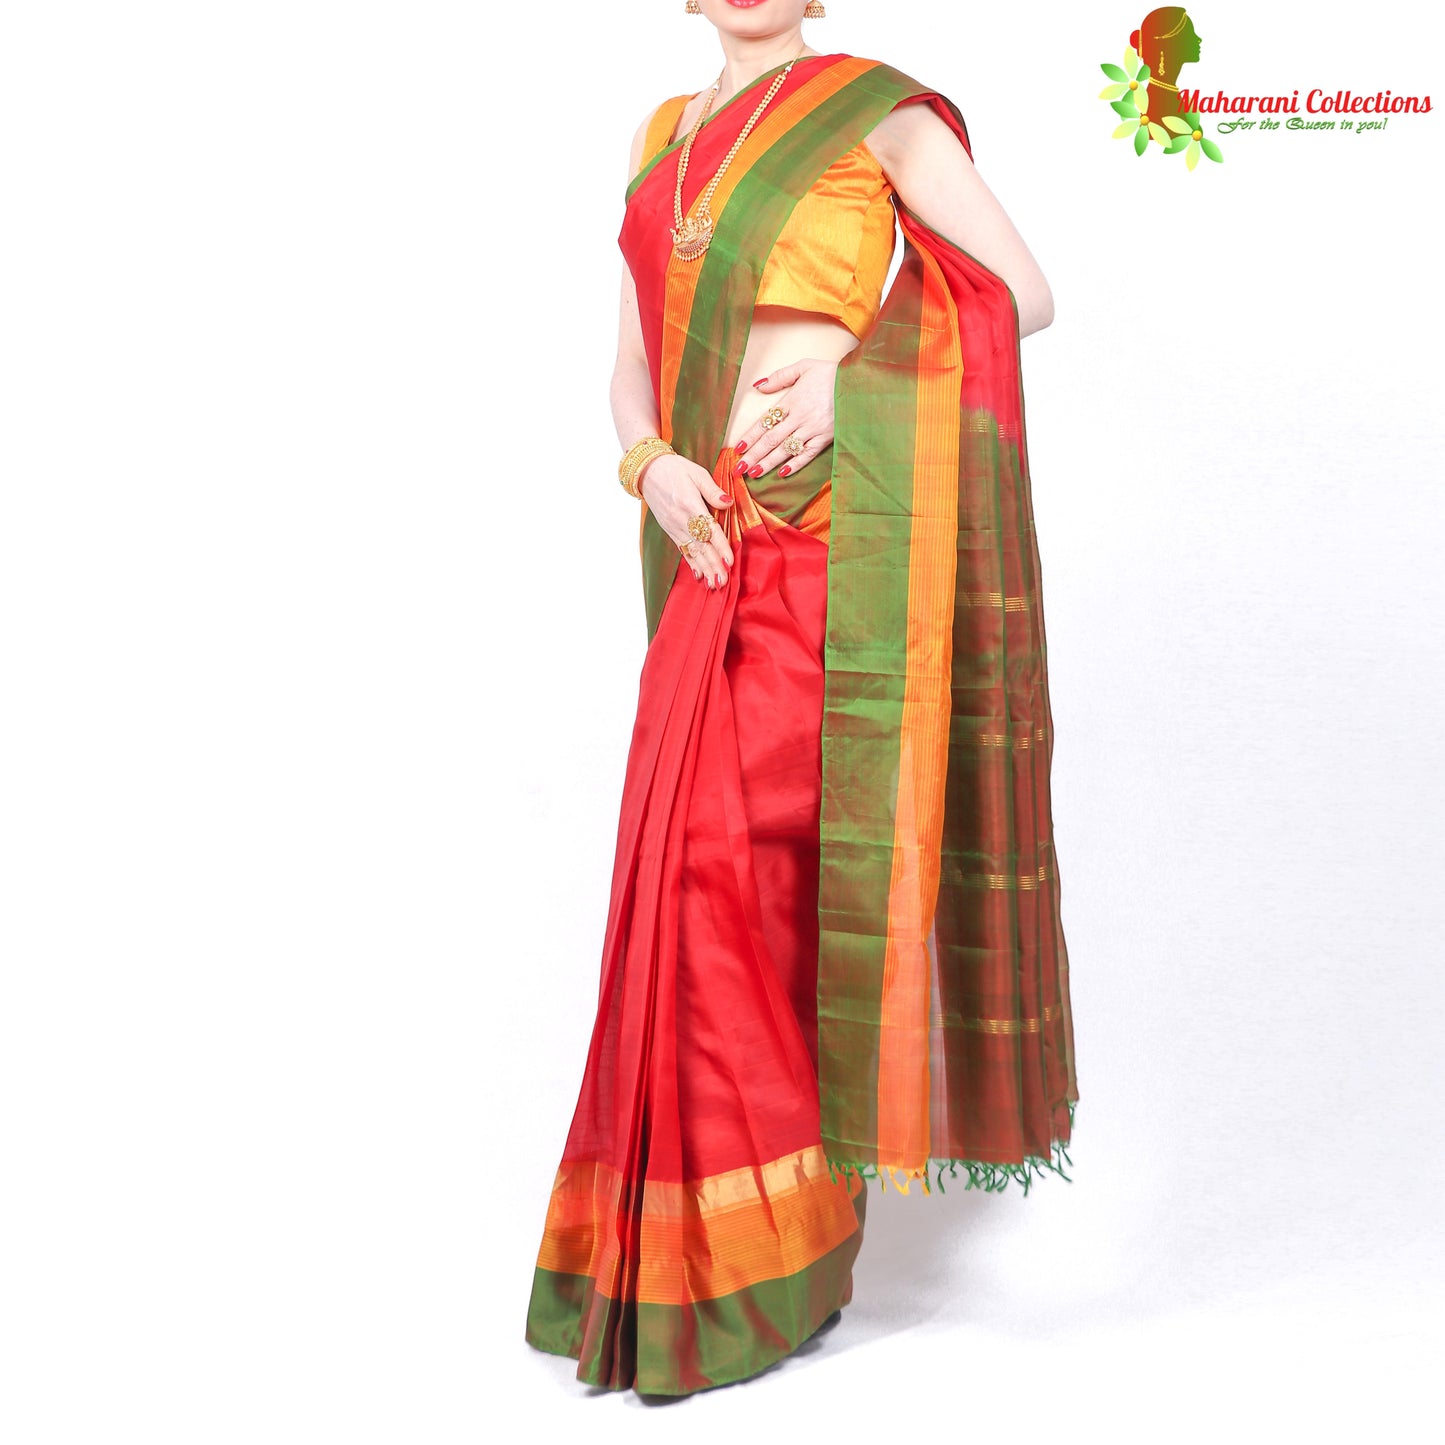 Maharani's Pure Handloom Kanjivaram Silk Saree - Red with Green and Golden Zari Border and Pallu